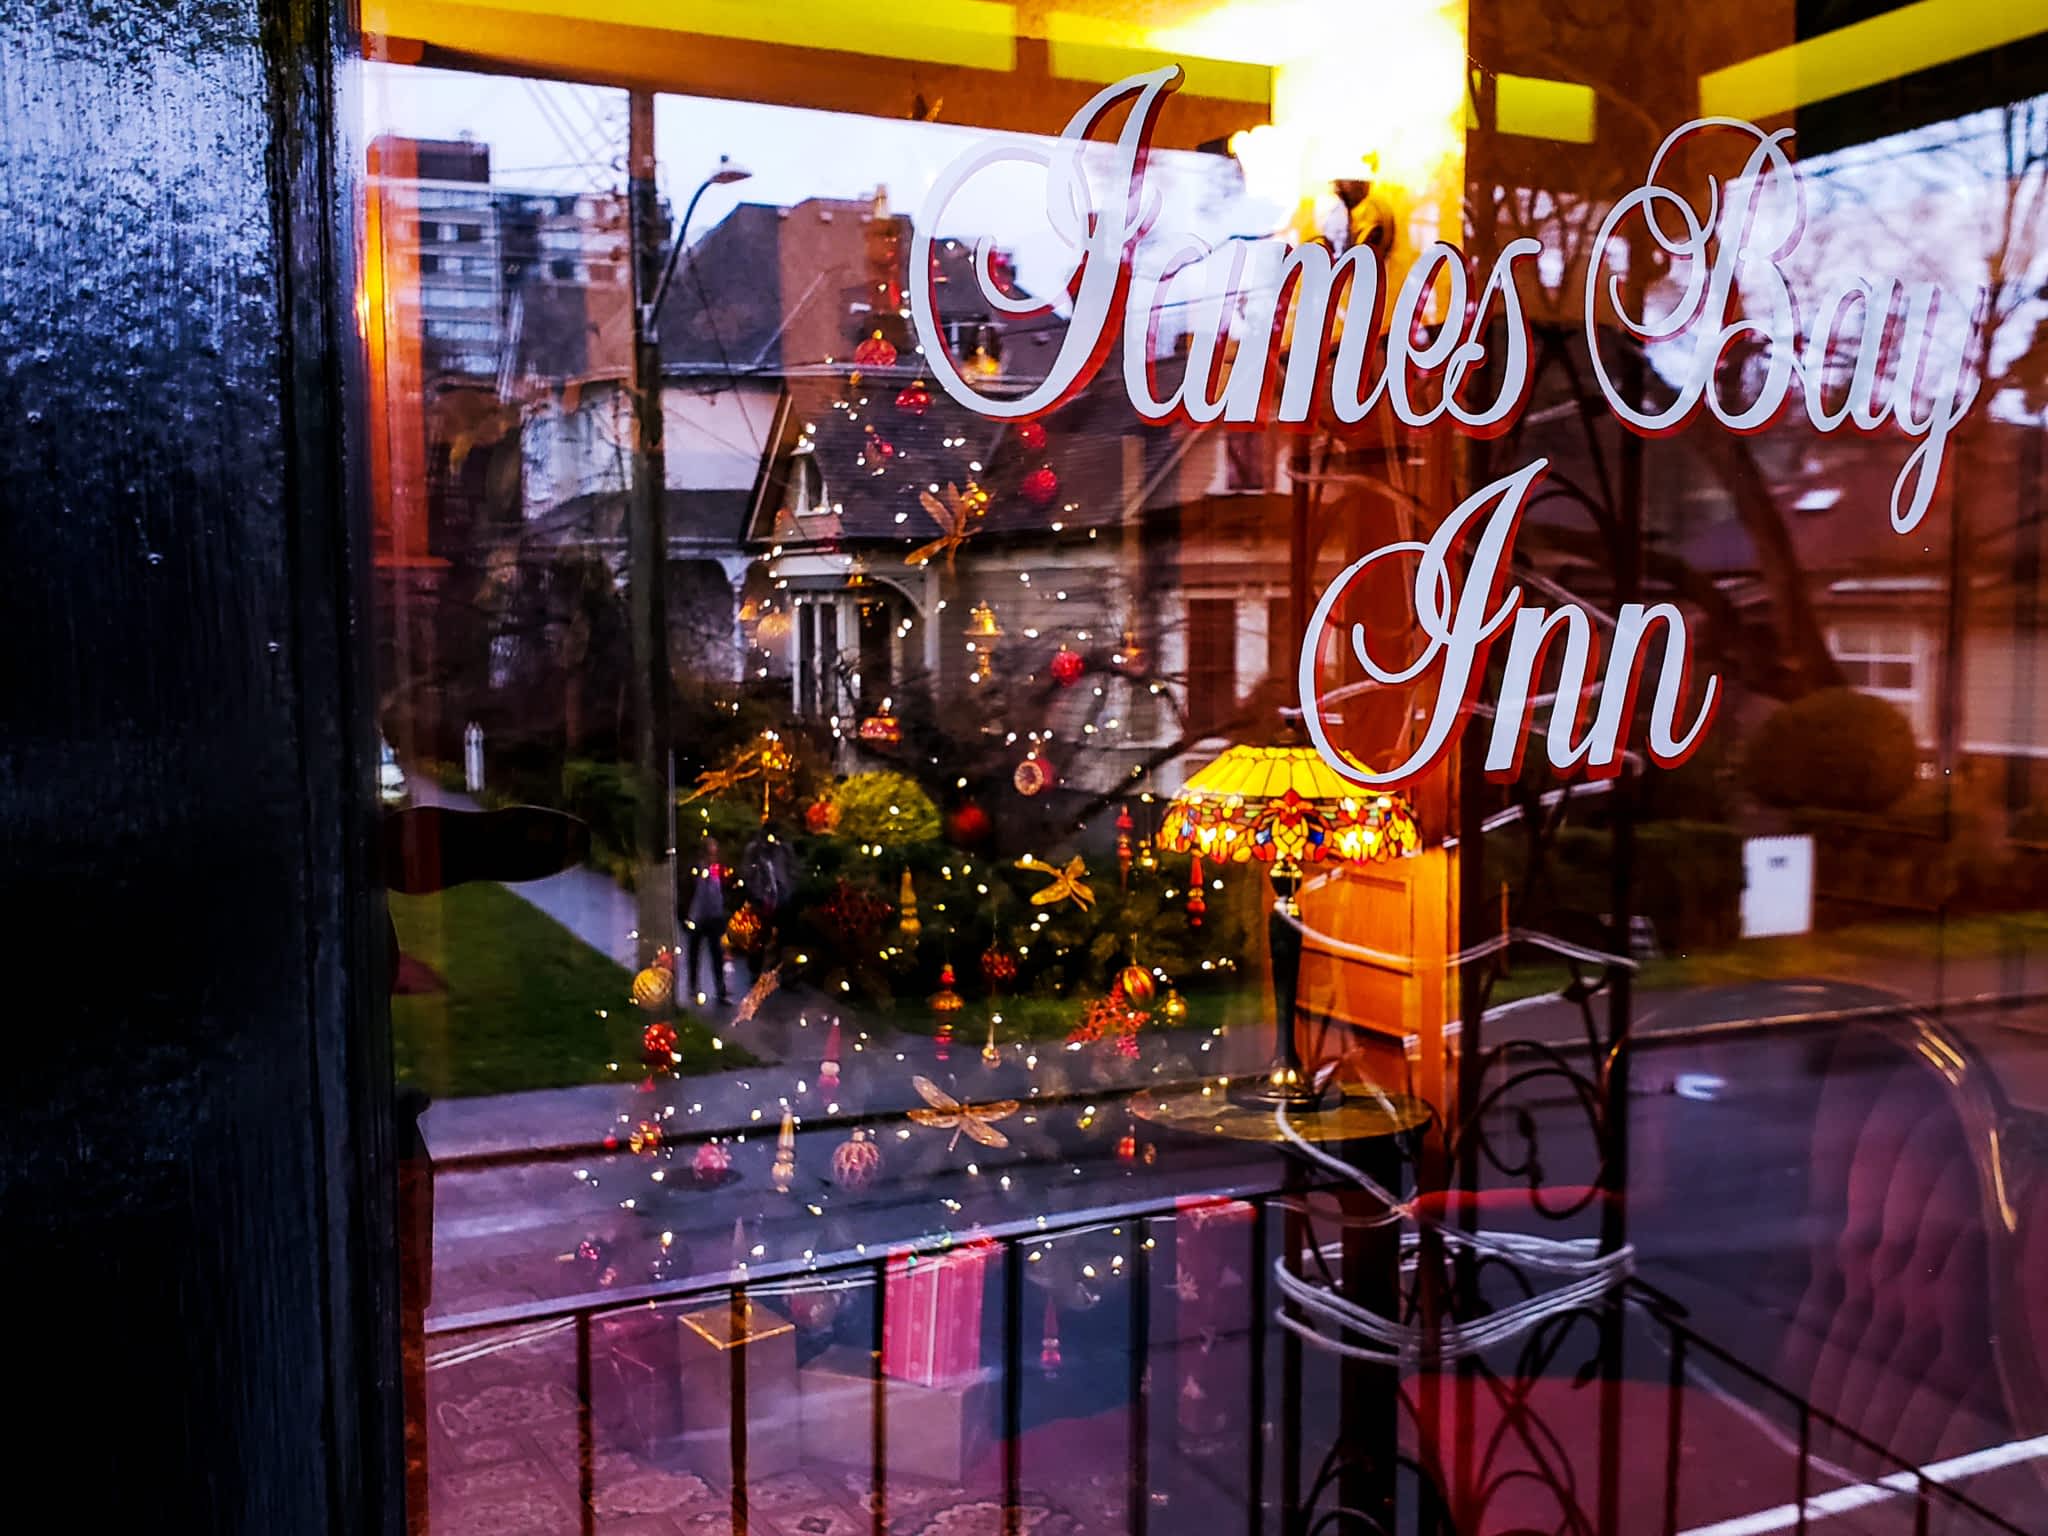 photo James Bay Inn Hotel & Suites